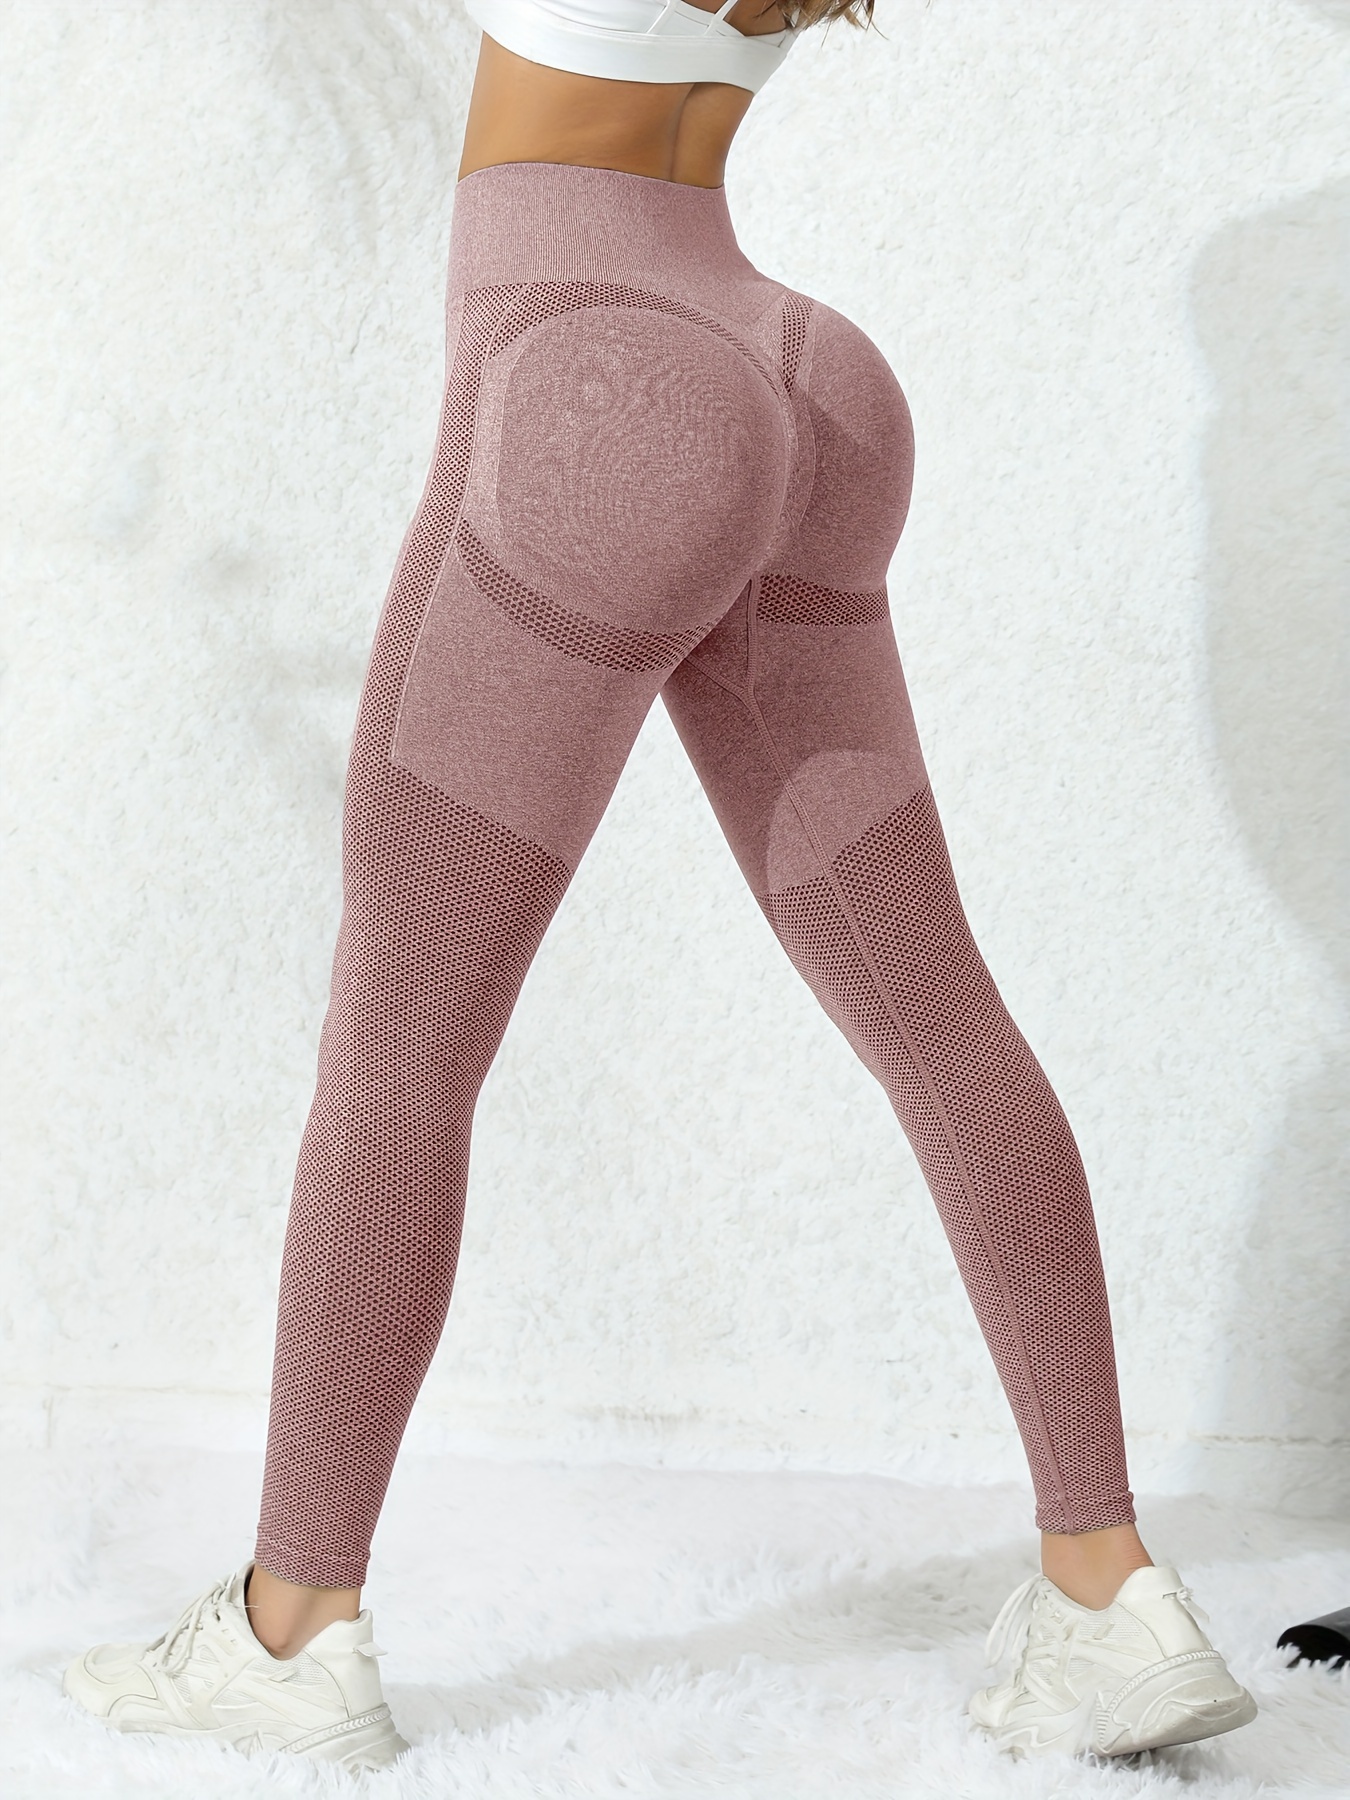 Long Yoga Pants for Women Tall Butt Lifting Workout Leggings Lace